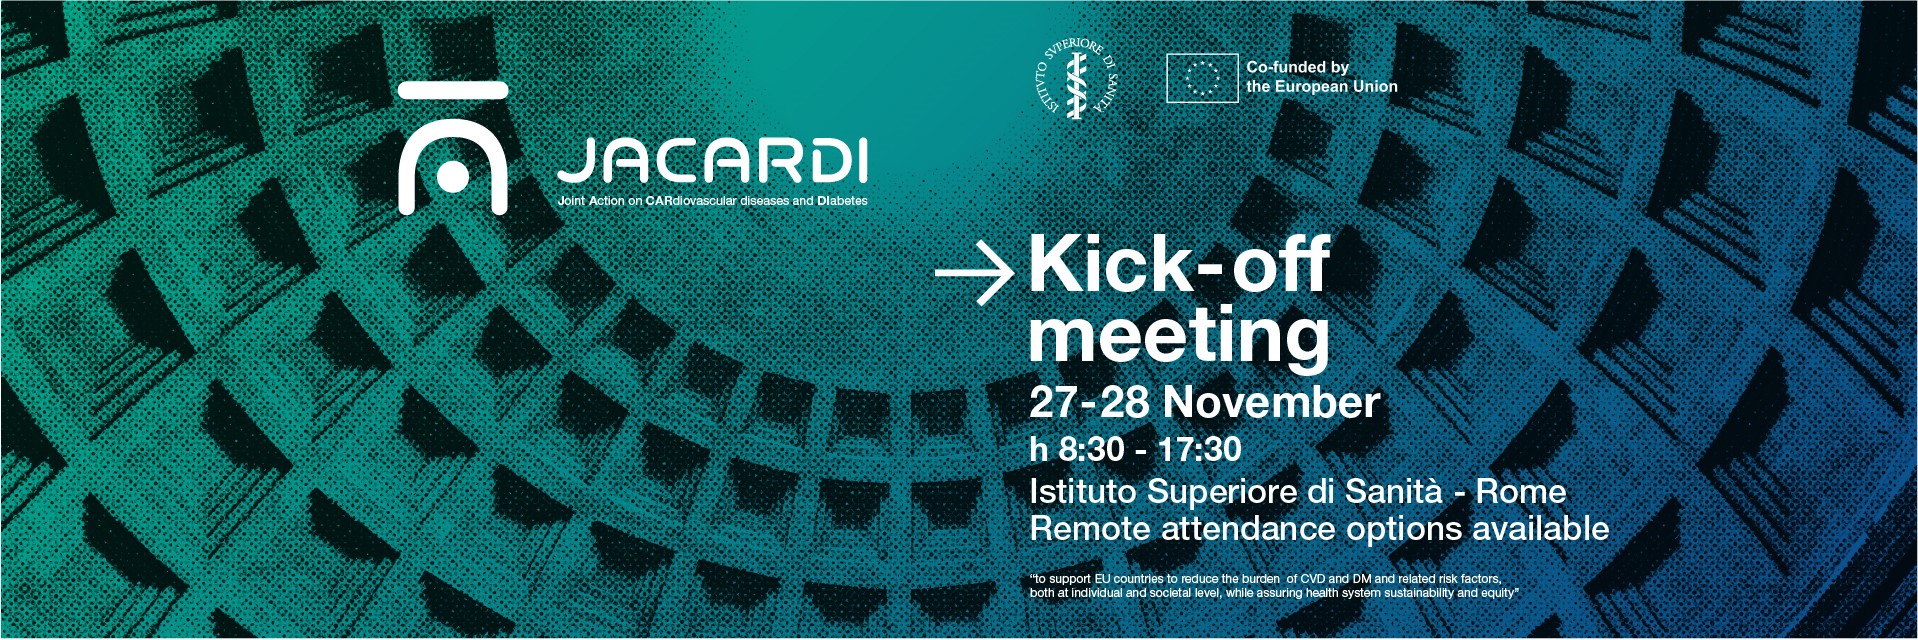 Kick-off meeting in Rome